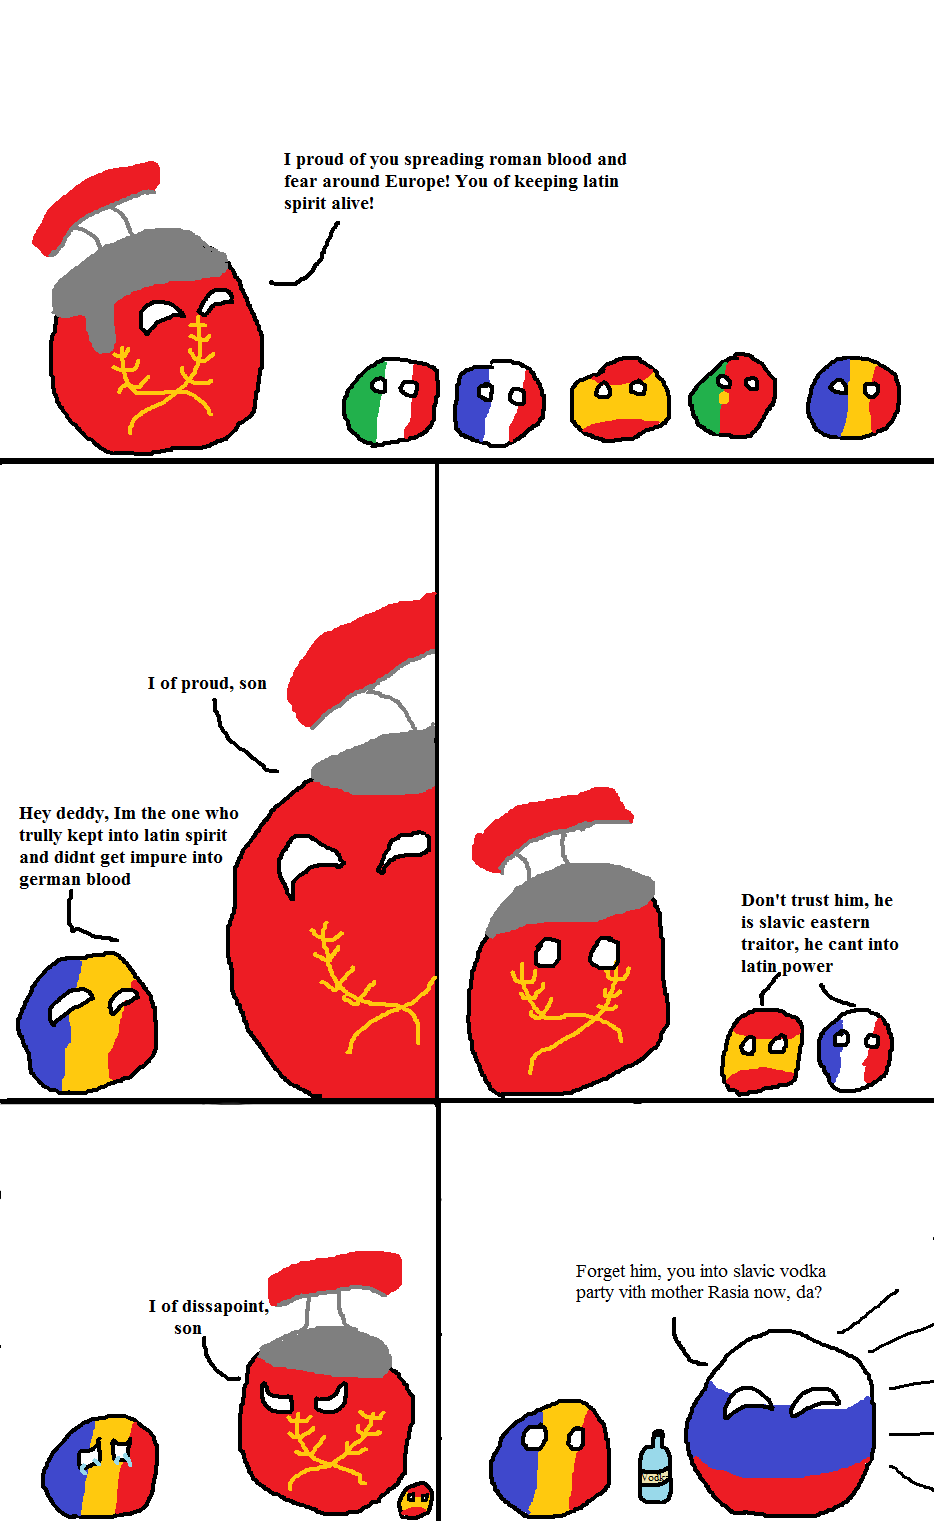 Rome and Romania